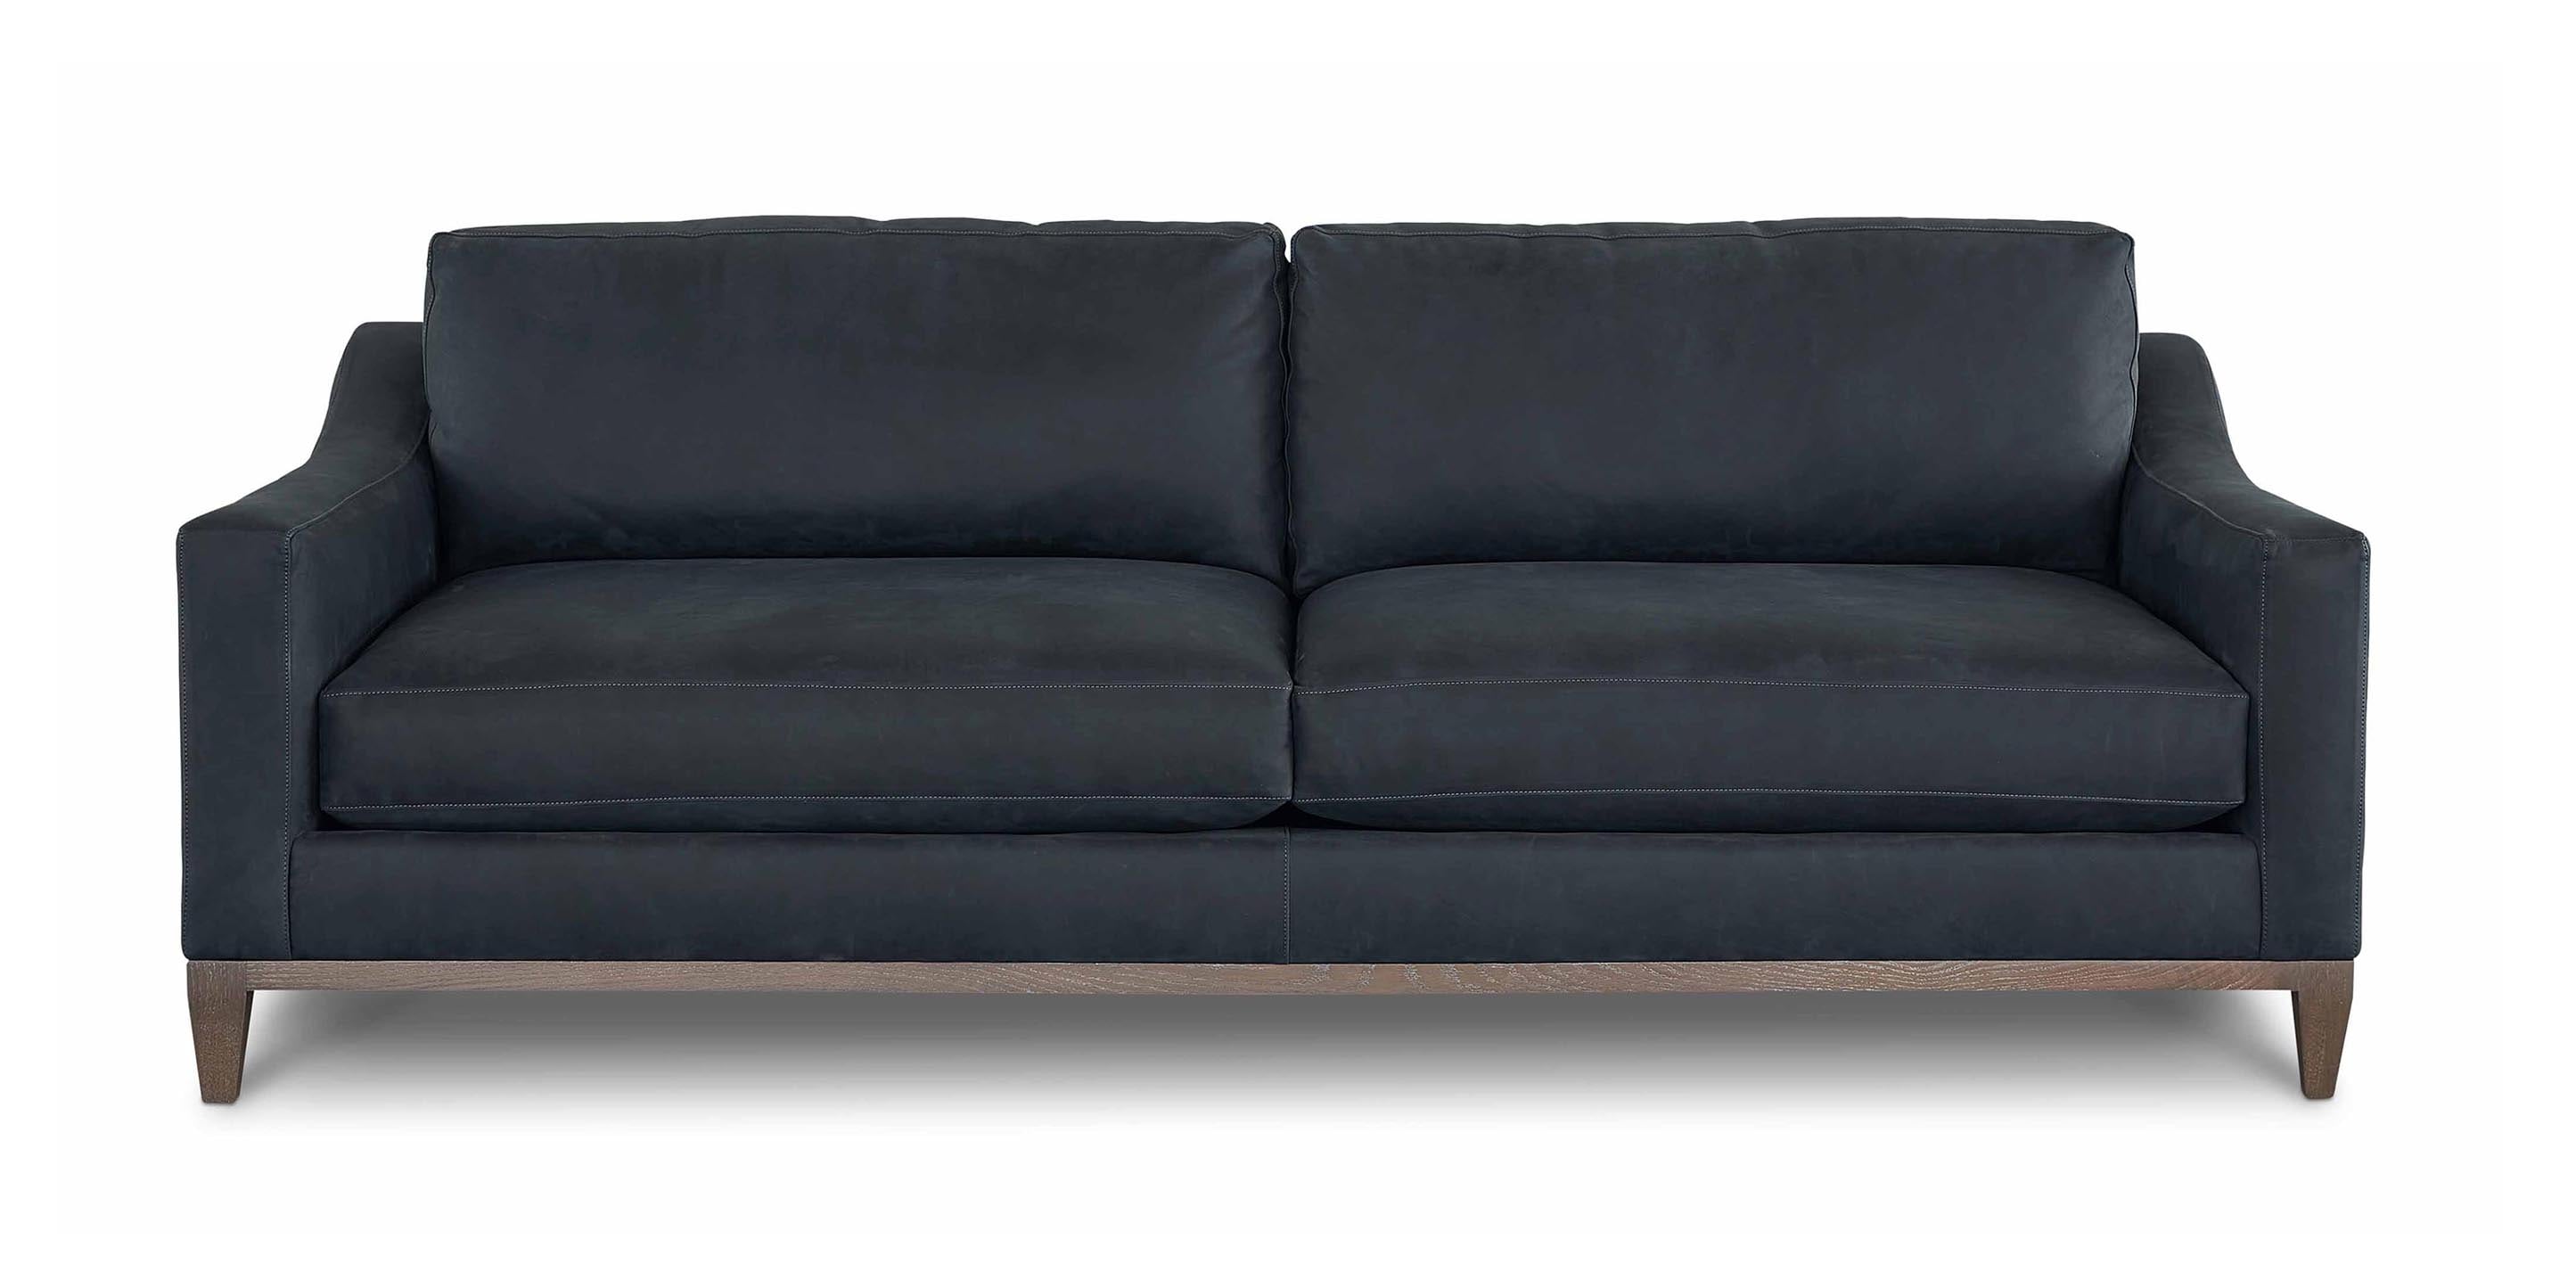 Sanford Leather Sofa